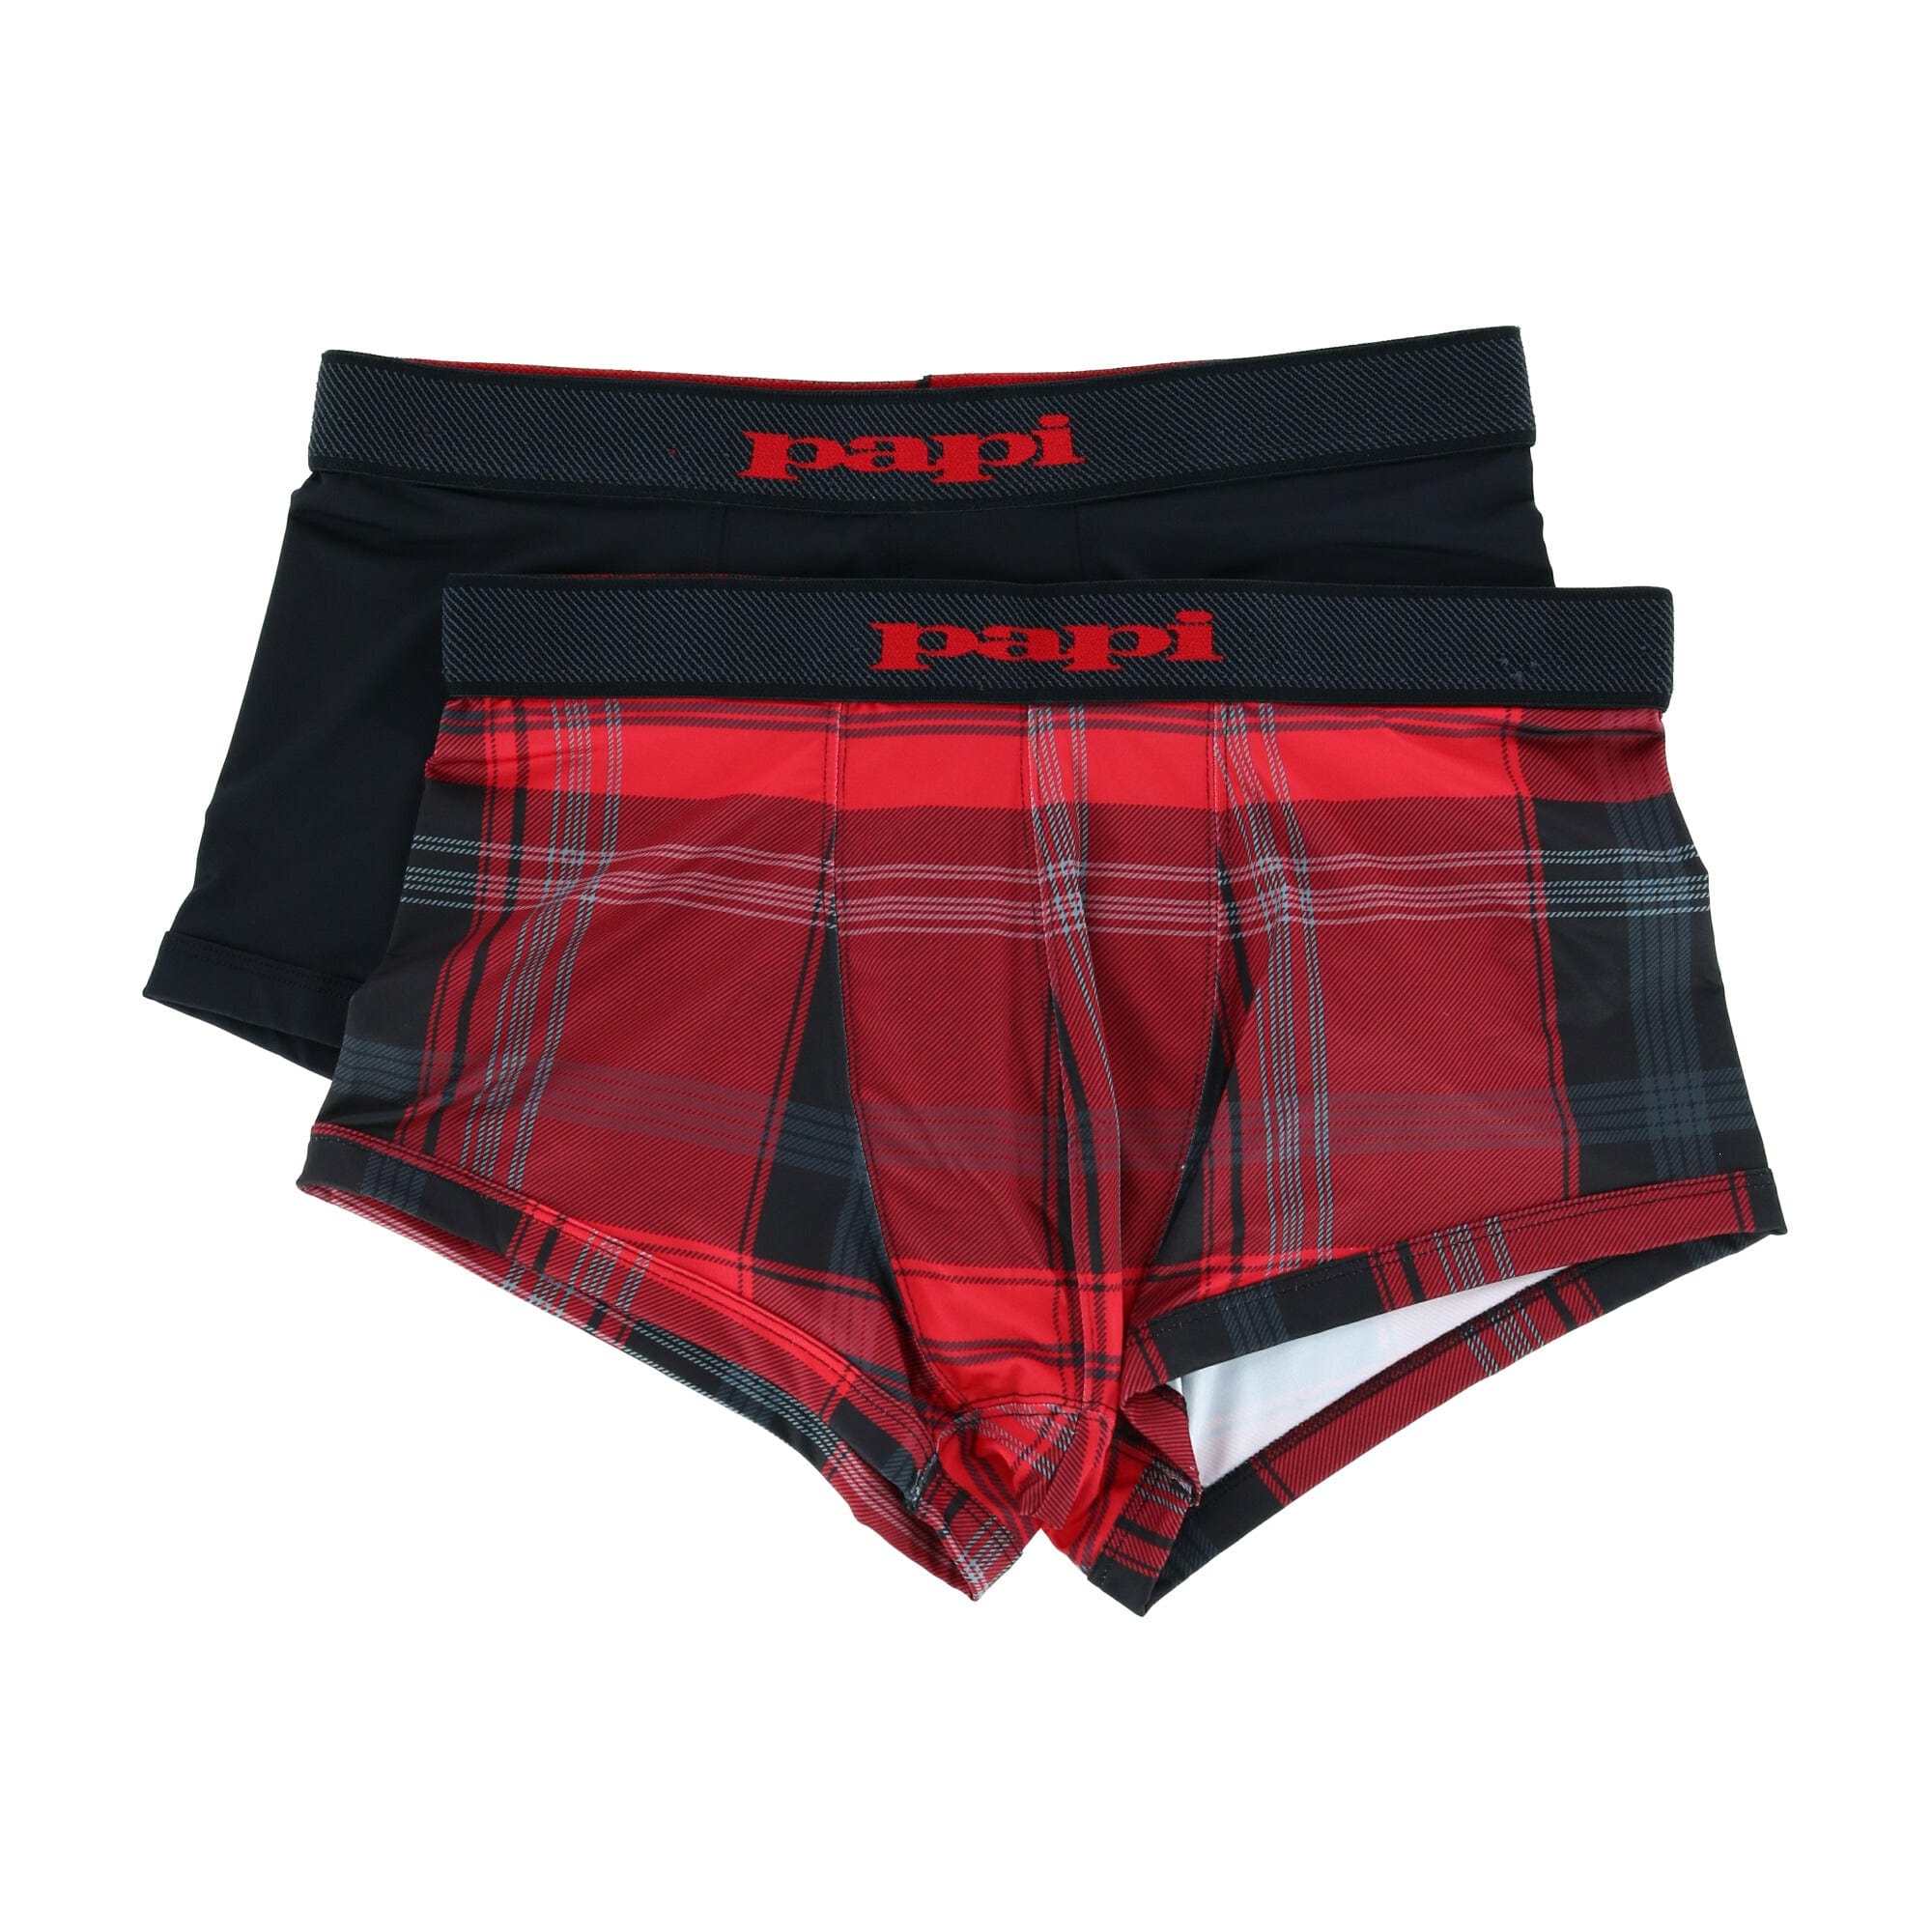 New Papi Men's Brazilian Cut Stripe and Solid Underwear Trunks (3 Pack)